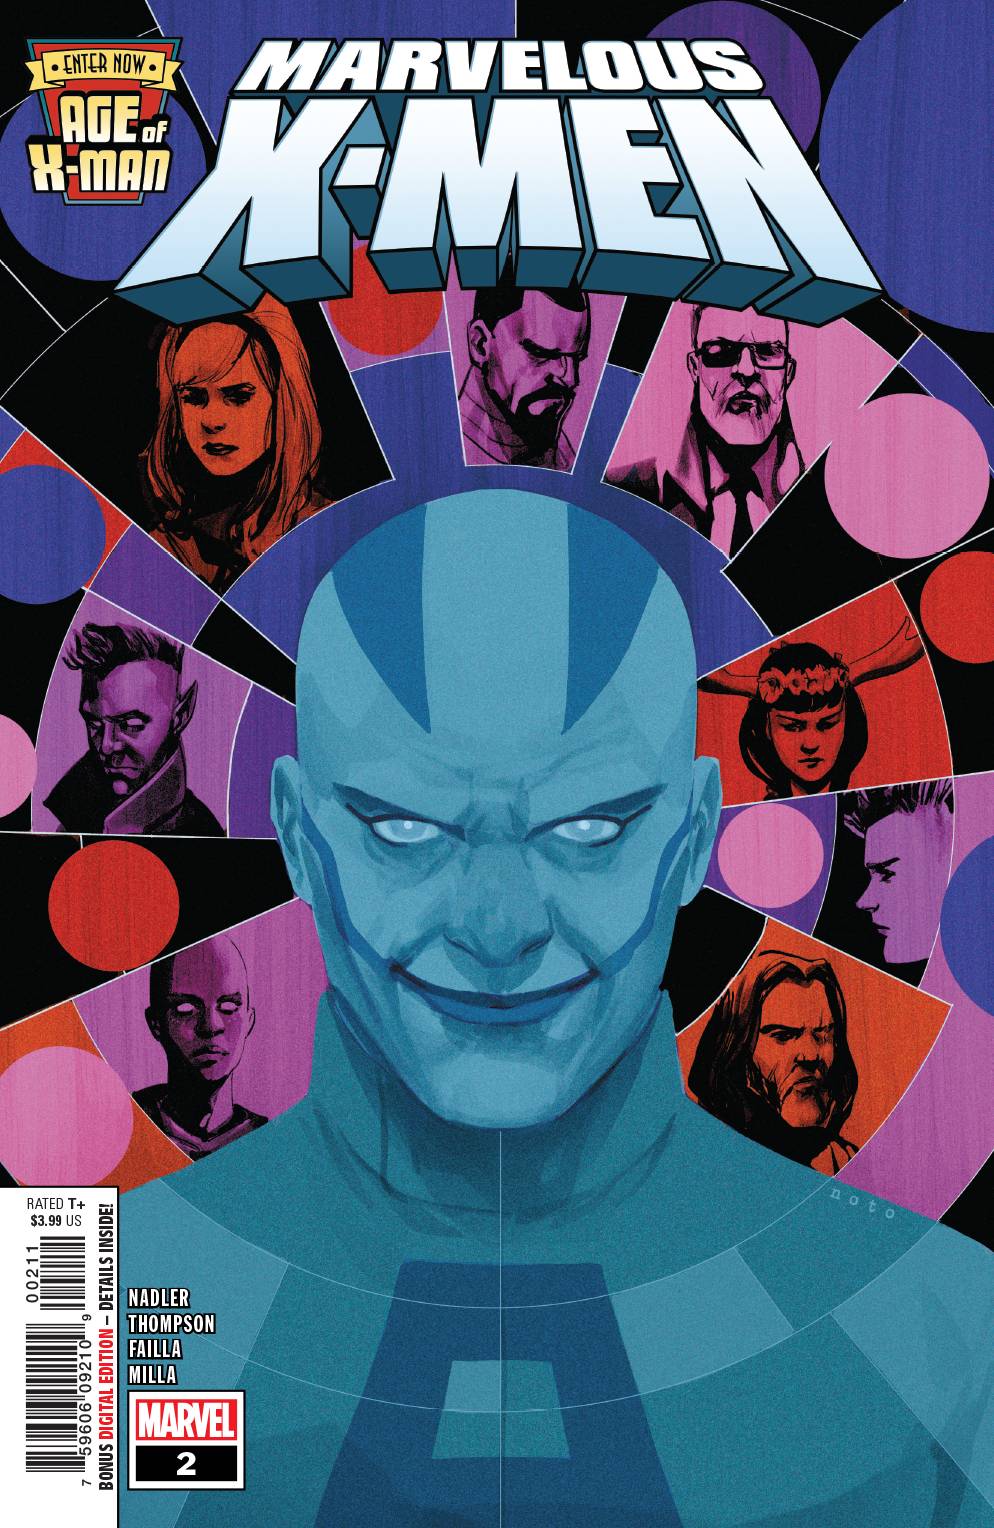 AGE OF X-MAN MARVELOUS X-MEN #2 (OF 5) 03/13/19